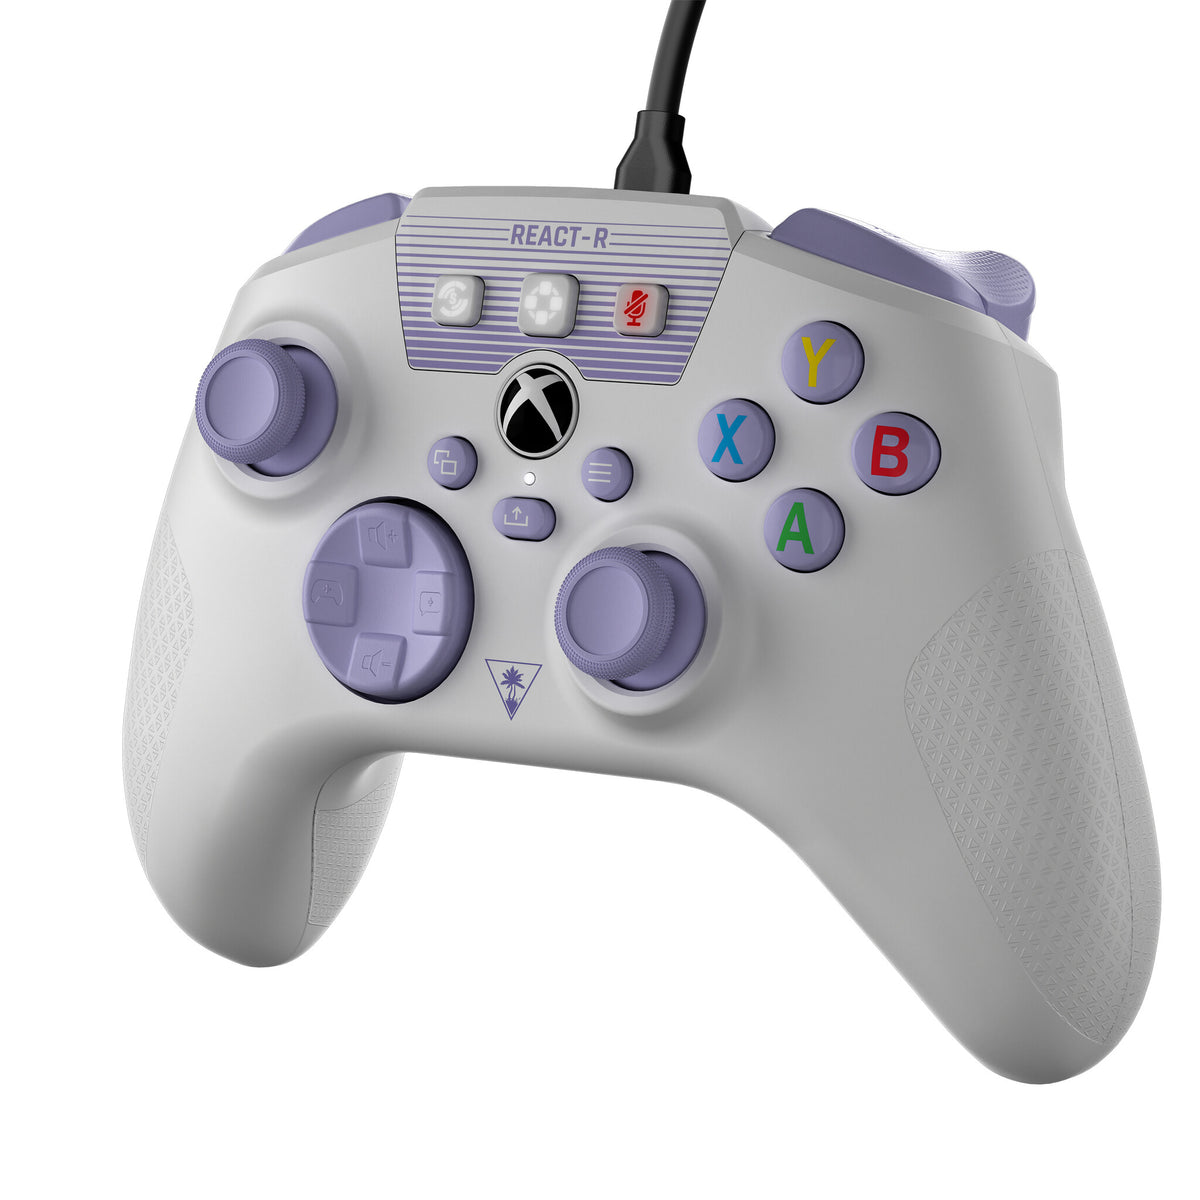 Turtle Beach REACT-R - USB Gamepad for PC / Xbox Series X|S in Purple / White